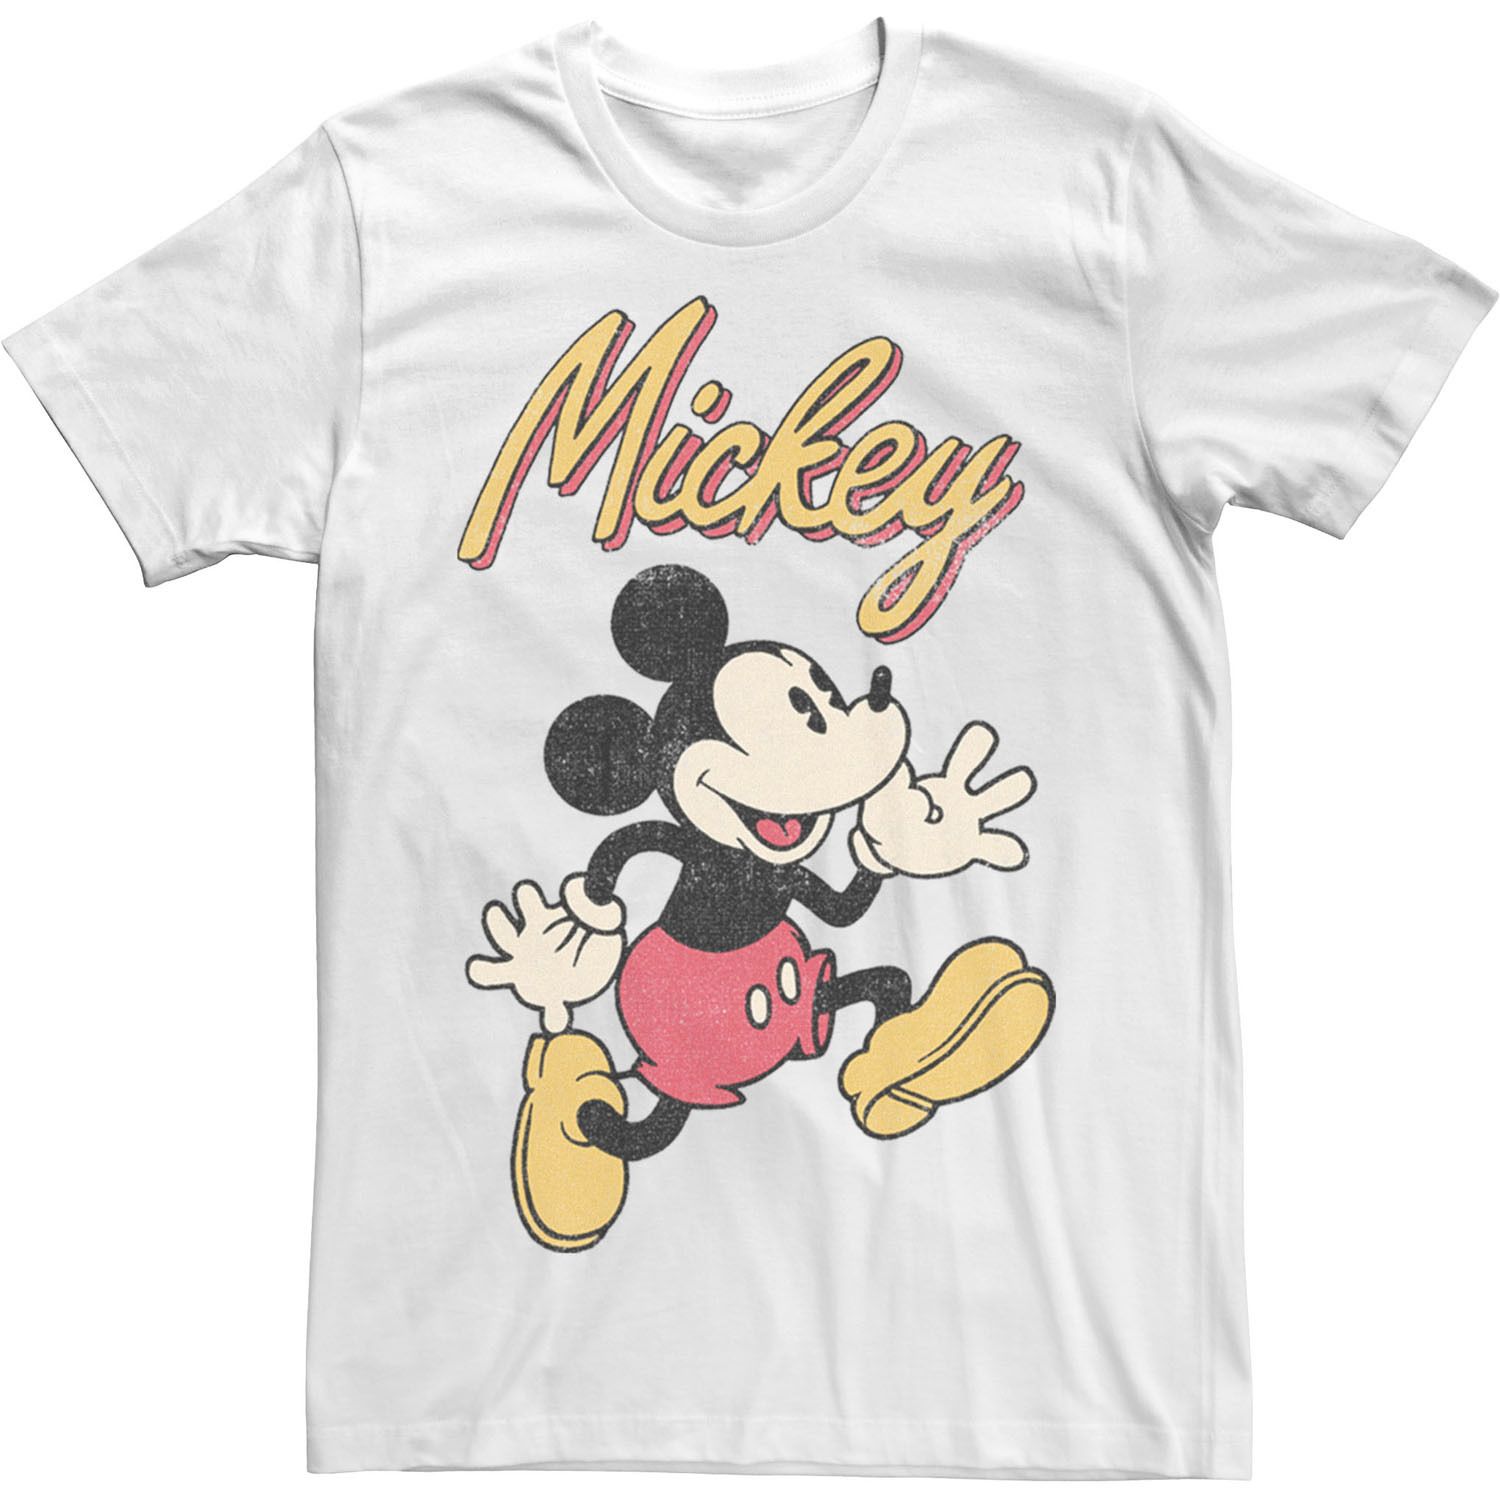 Мужская классическая футболка с портретом для бега Disney Mickey And Friends Mickey Licensed Character мужская футболка с портретом disney epic mickey painting licensed character